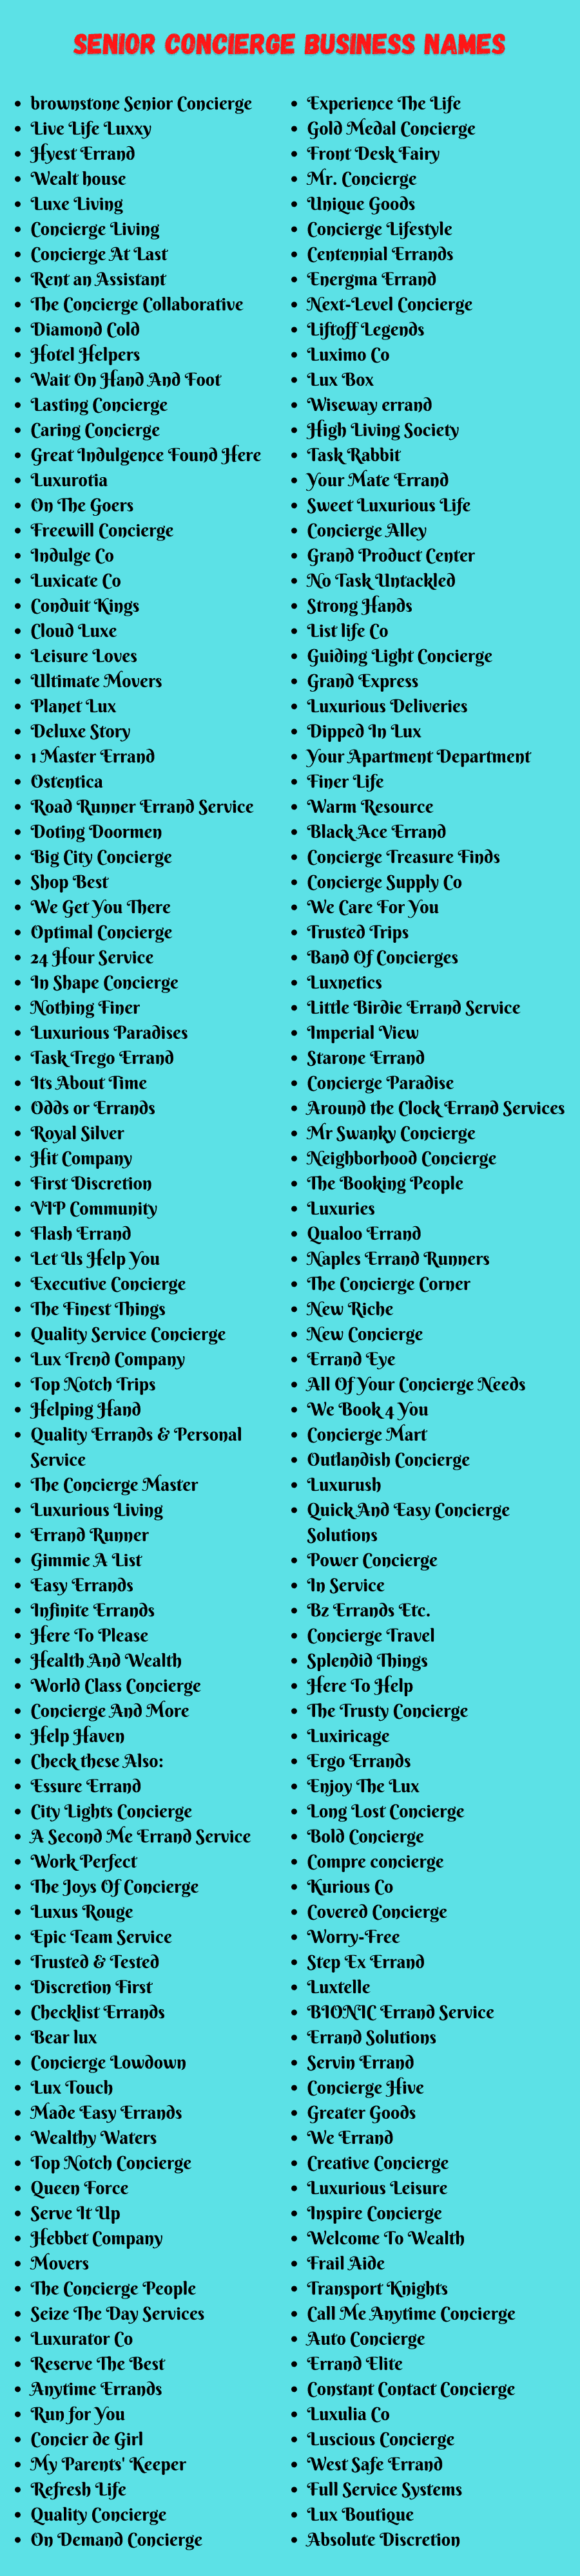 Senior Concierge Business Names